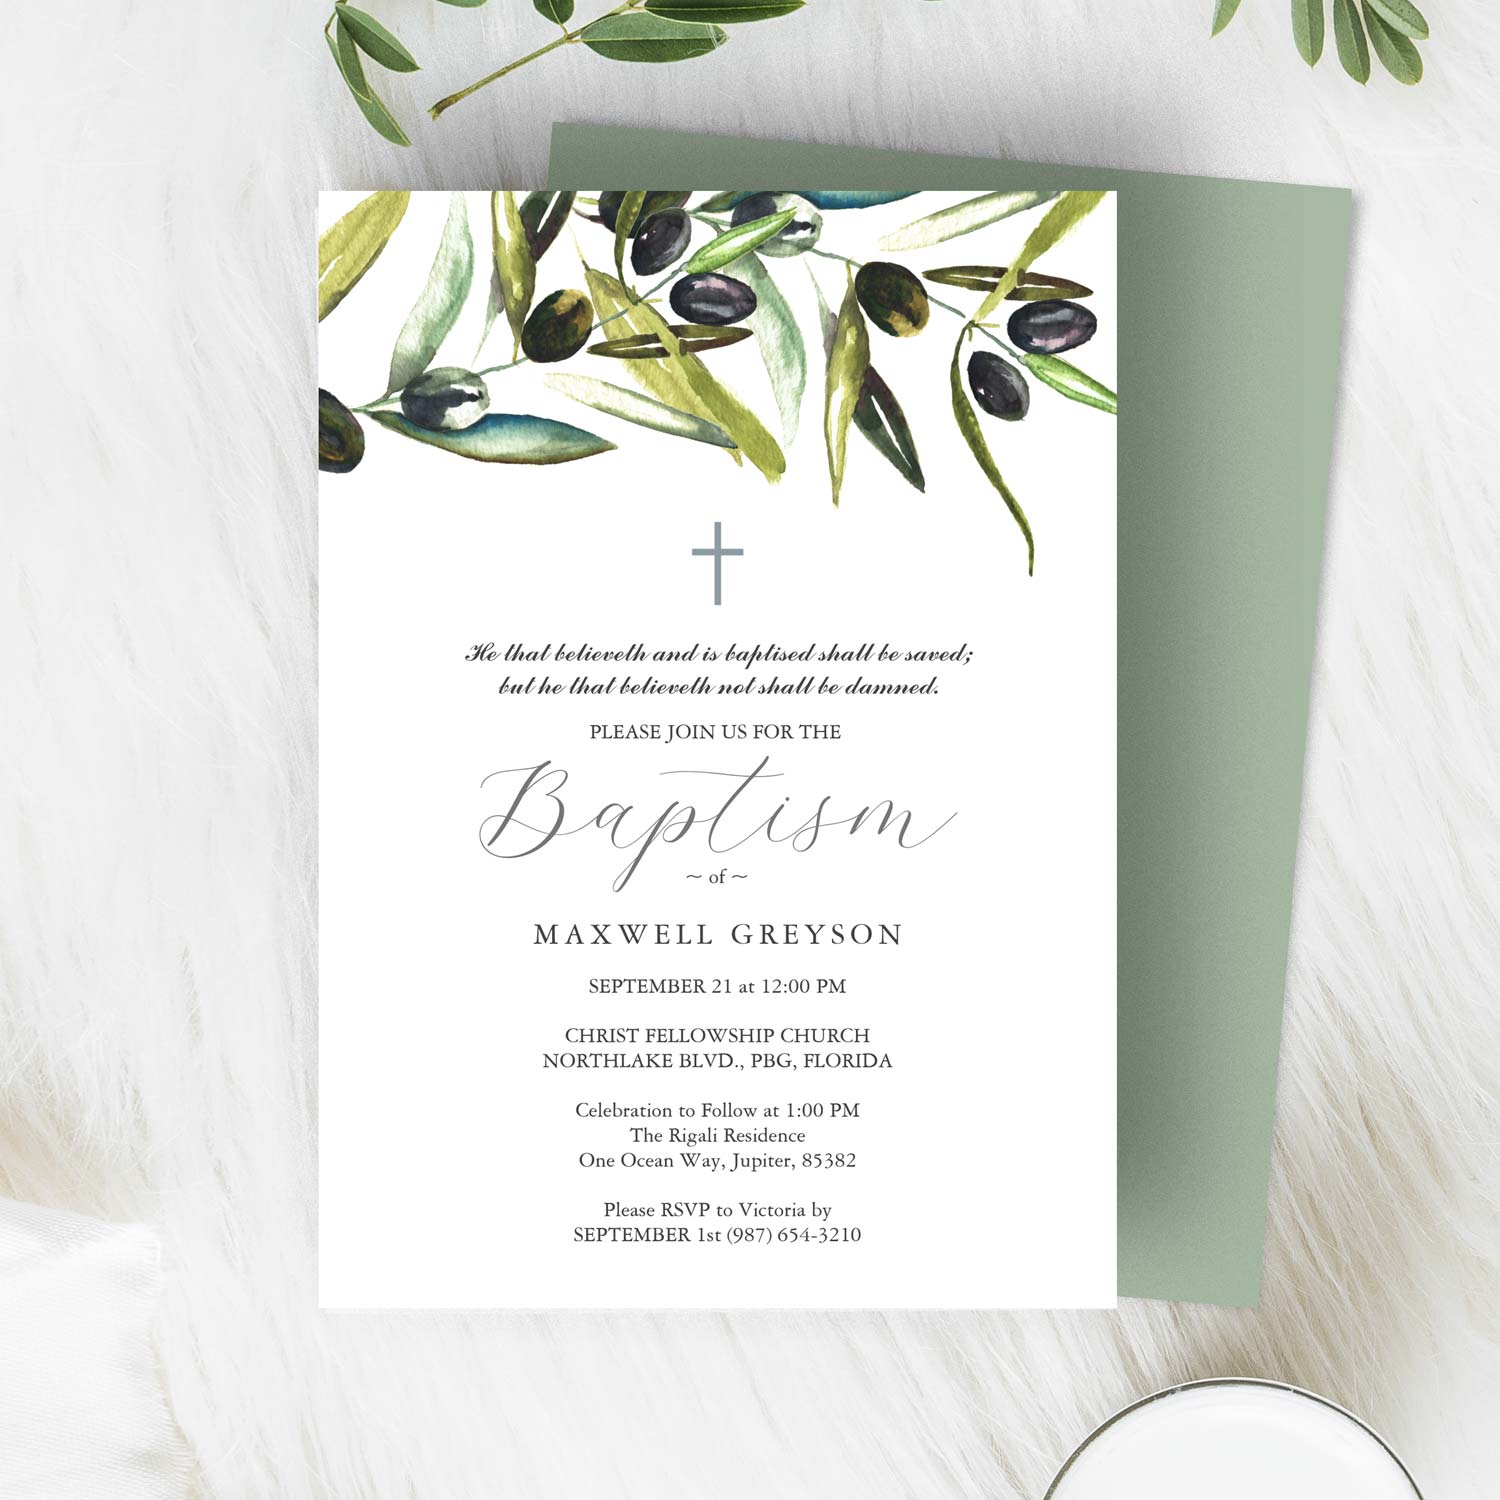 Baptism invitations feature unique watercolor olive branch art by Victoria Grigaliunas. Click to shop.